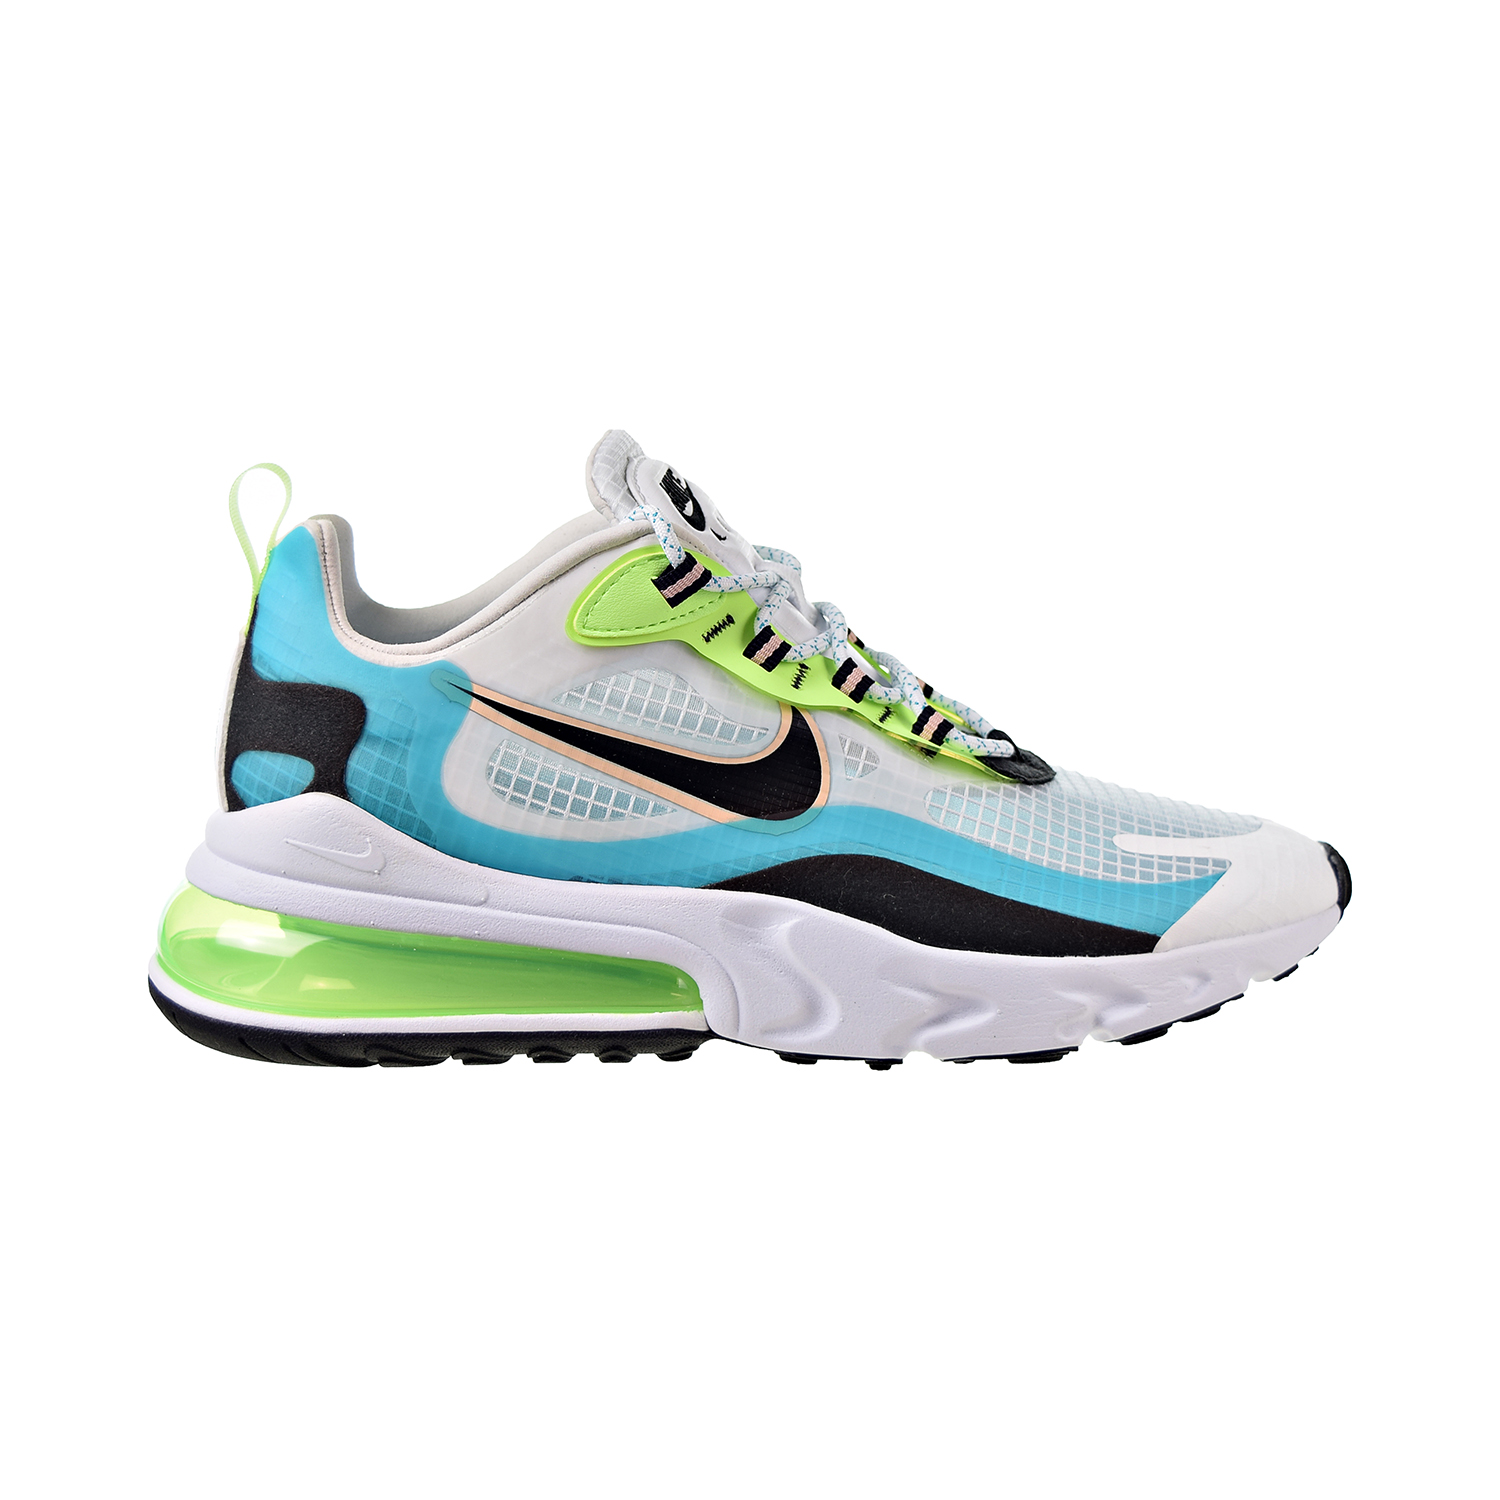 Nike Air Max 270 React SE Men's Shoes Oracle Aqua-Black-Ghost Green ct1265-300 - image 1 of 6